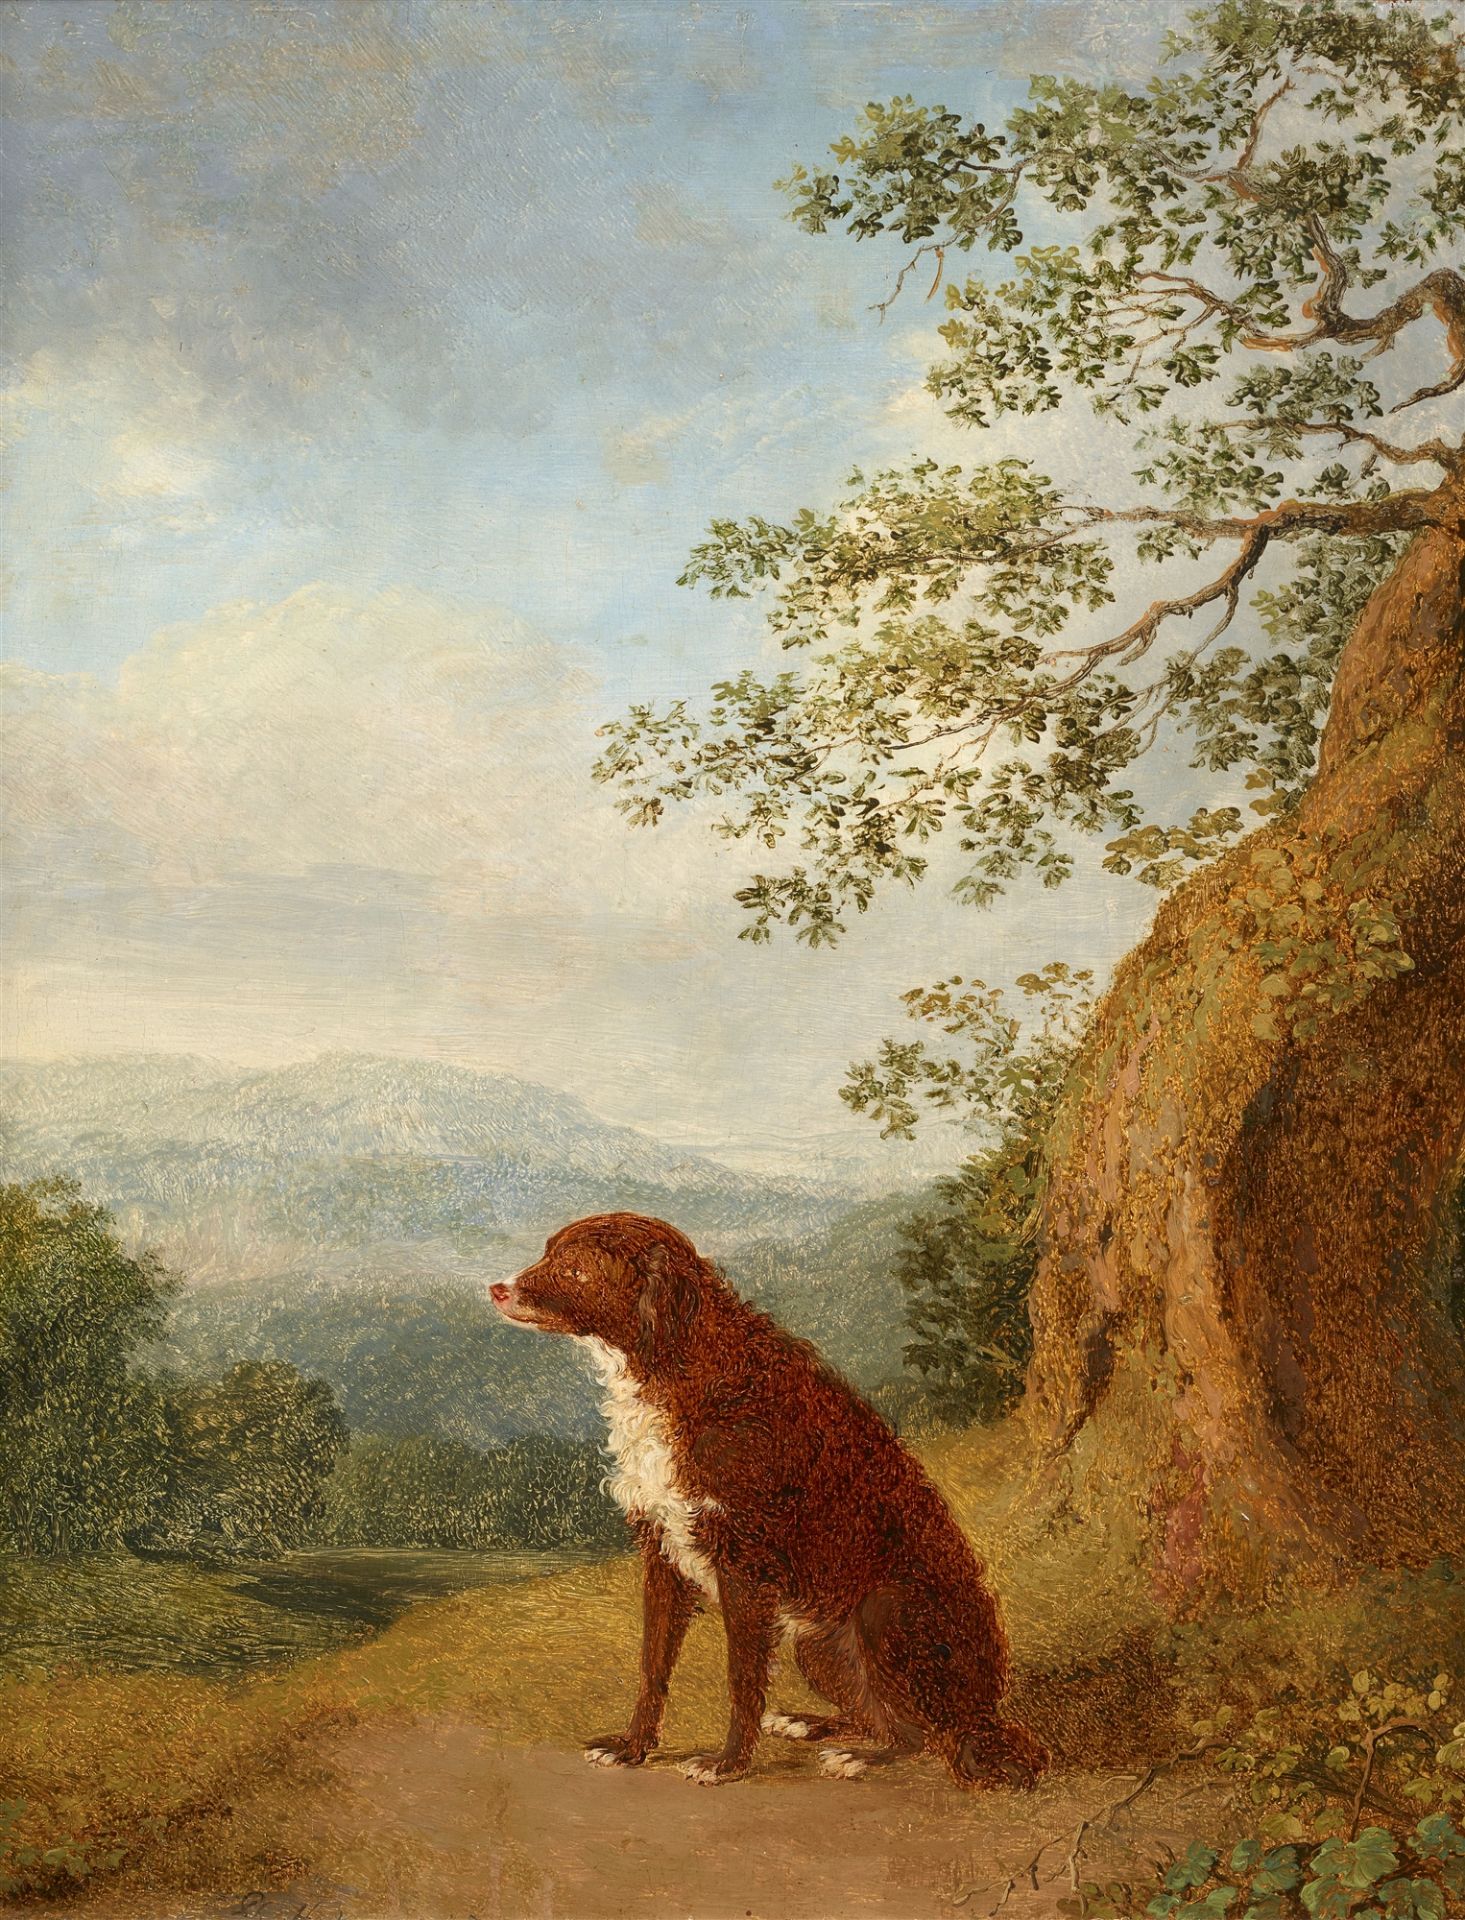 Jacob Philipp Hackert, Sitting dog in a landscape